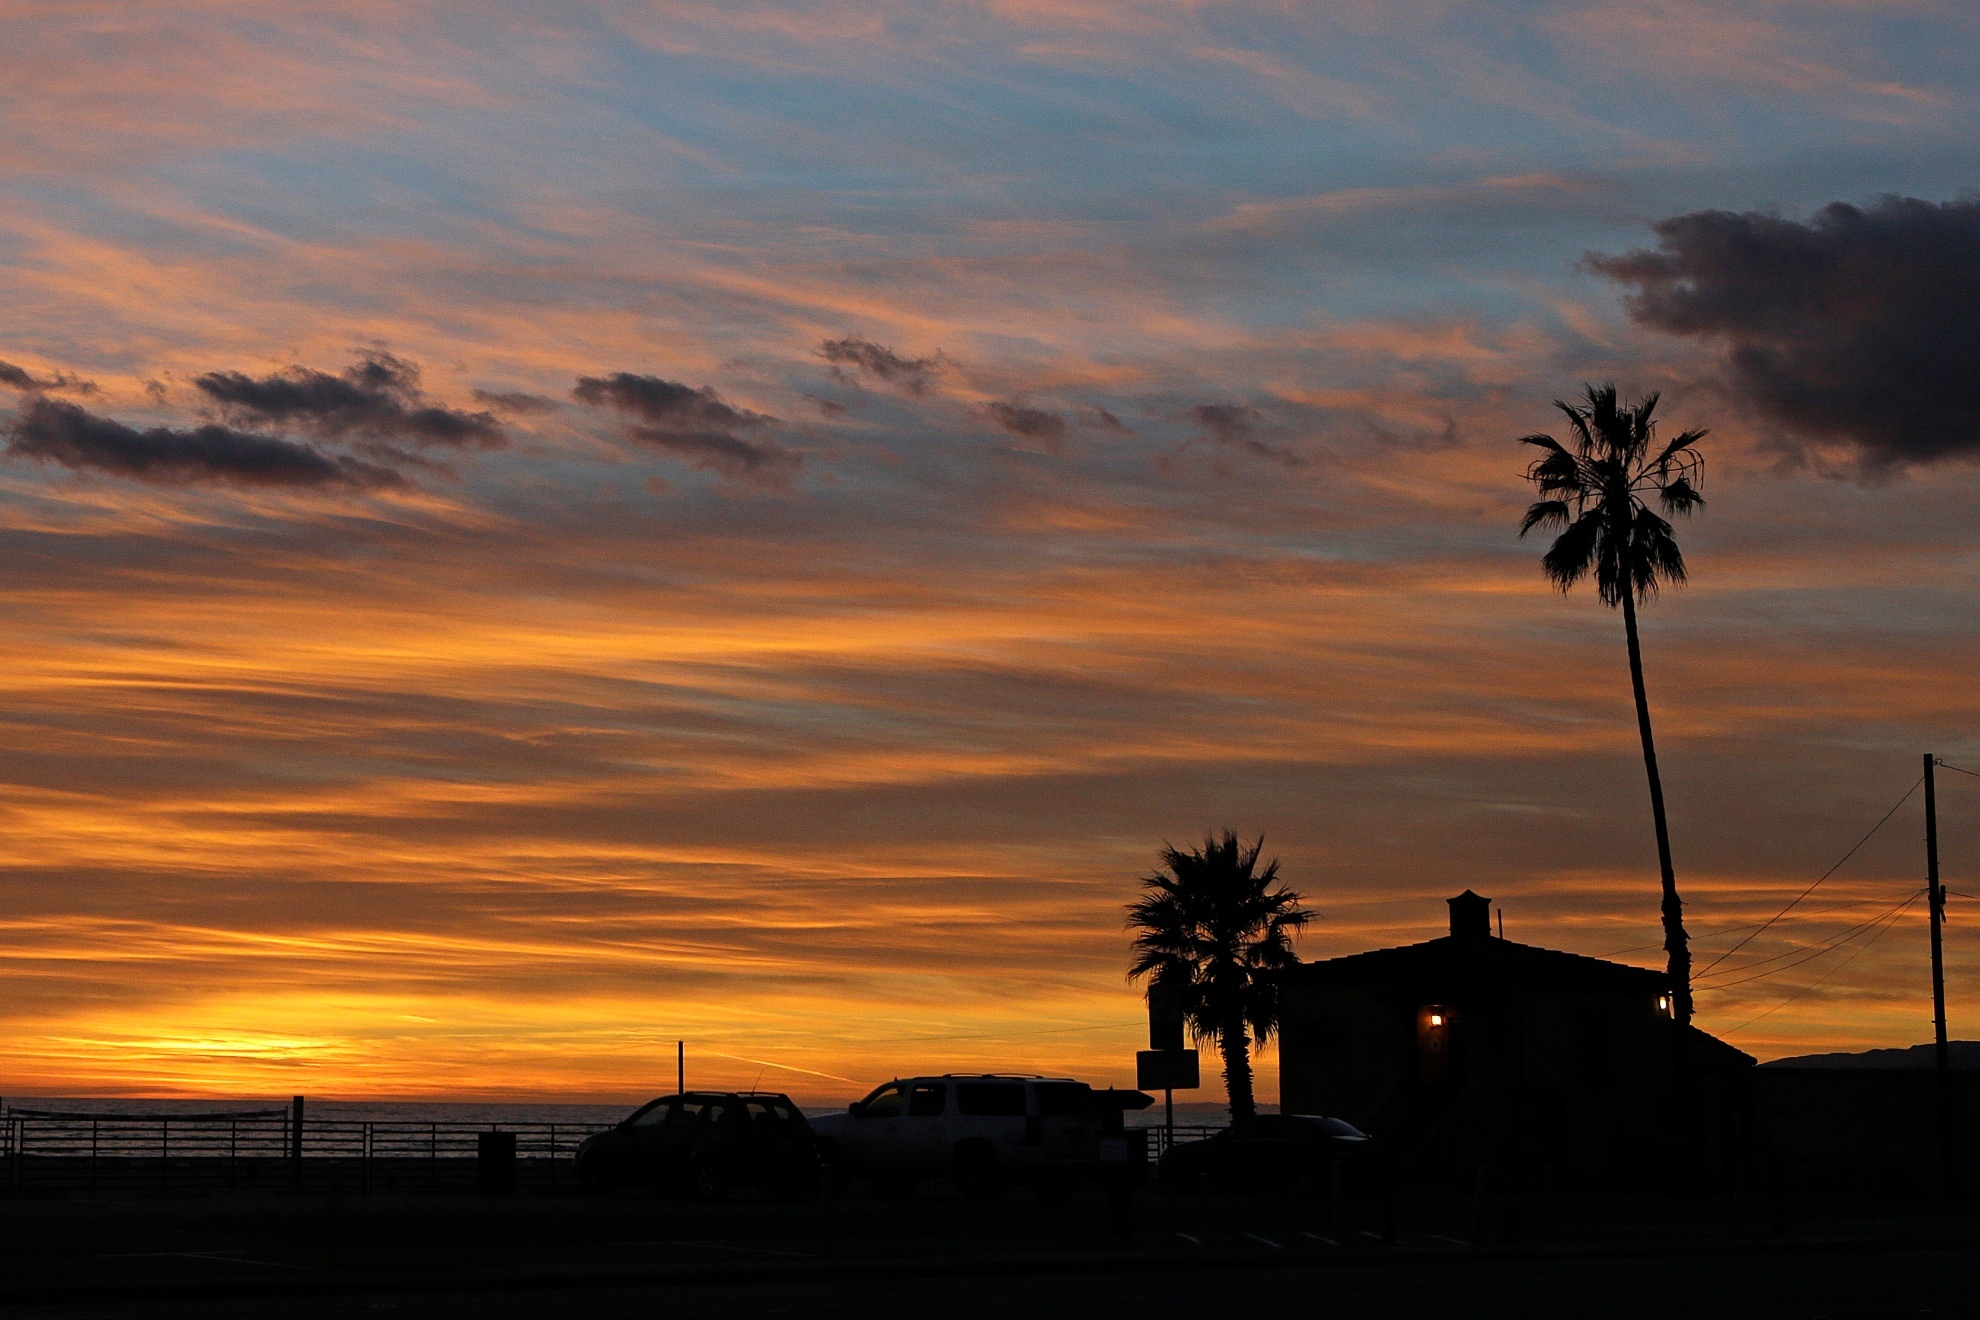 A beautiful sunset from California.